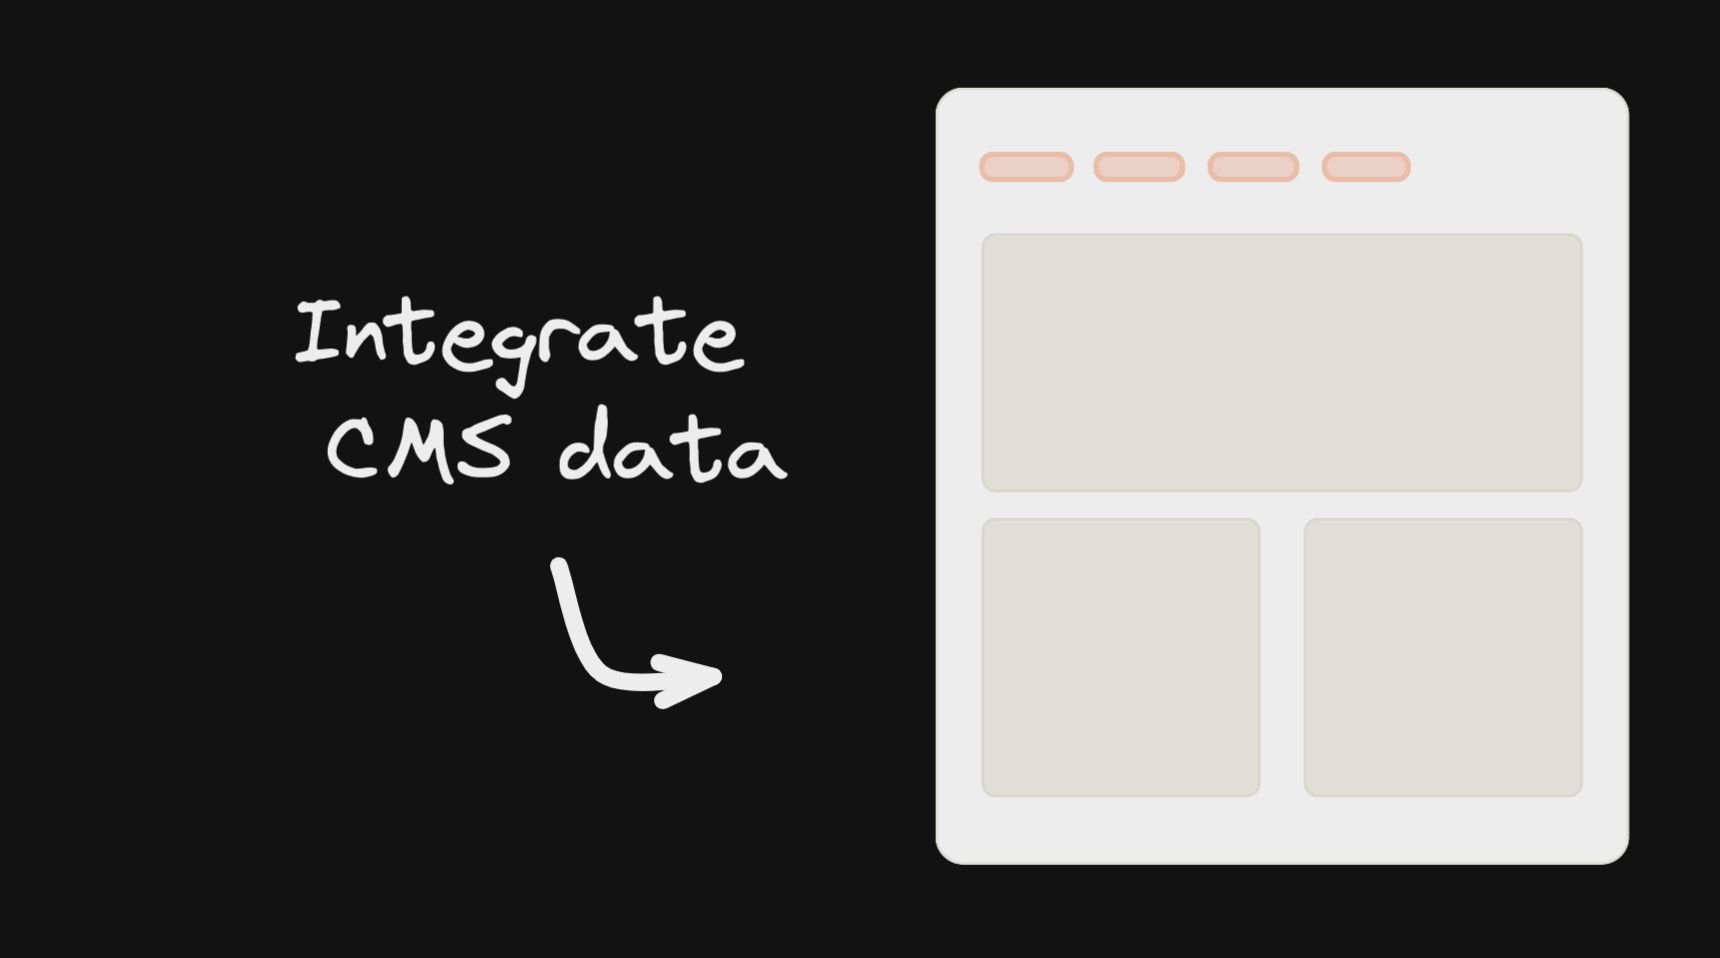 CTA to integrate CMS data